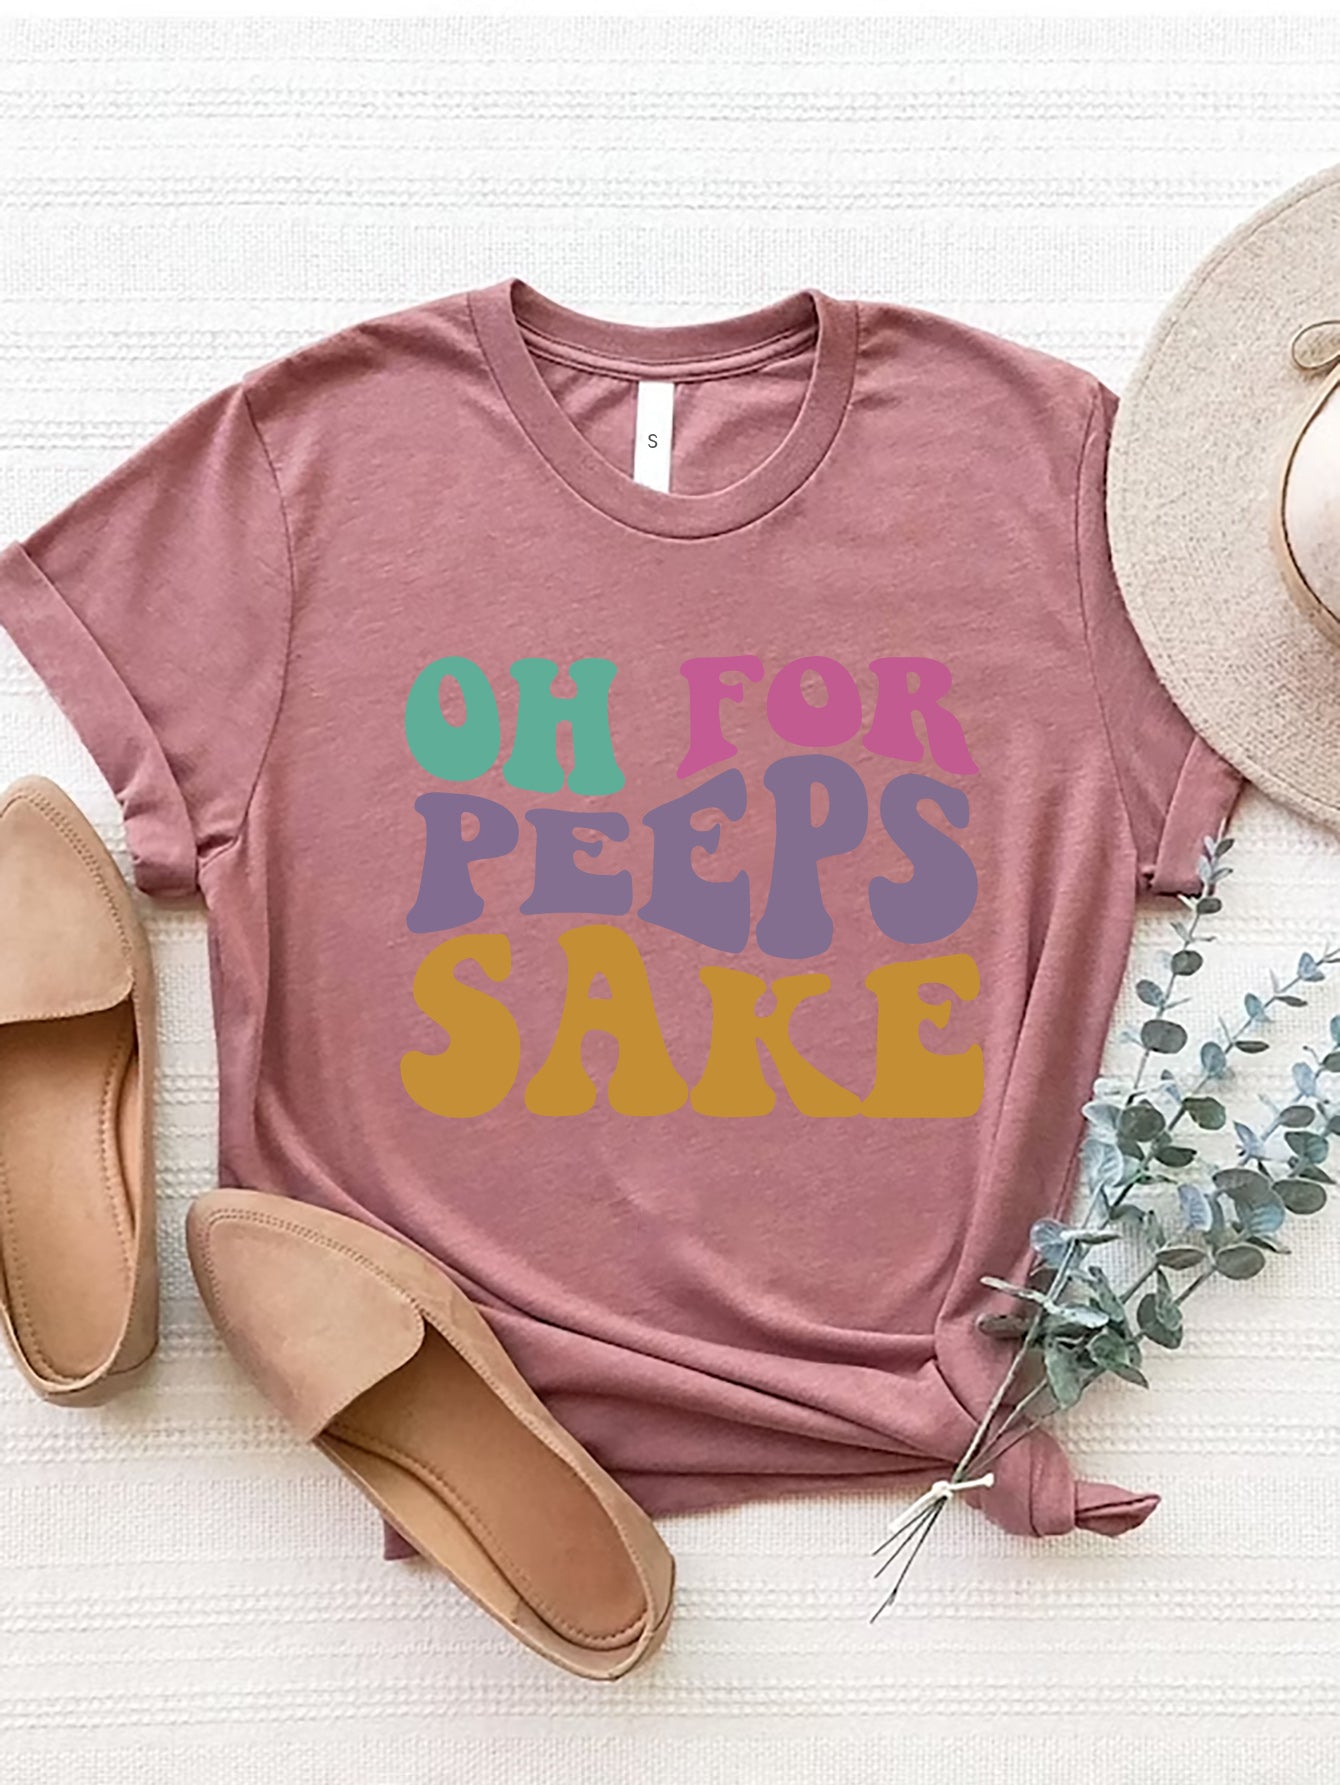 PREORDER- OH FOR PEEPS SAKE Round Neck T-Shirt